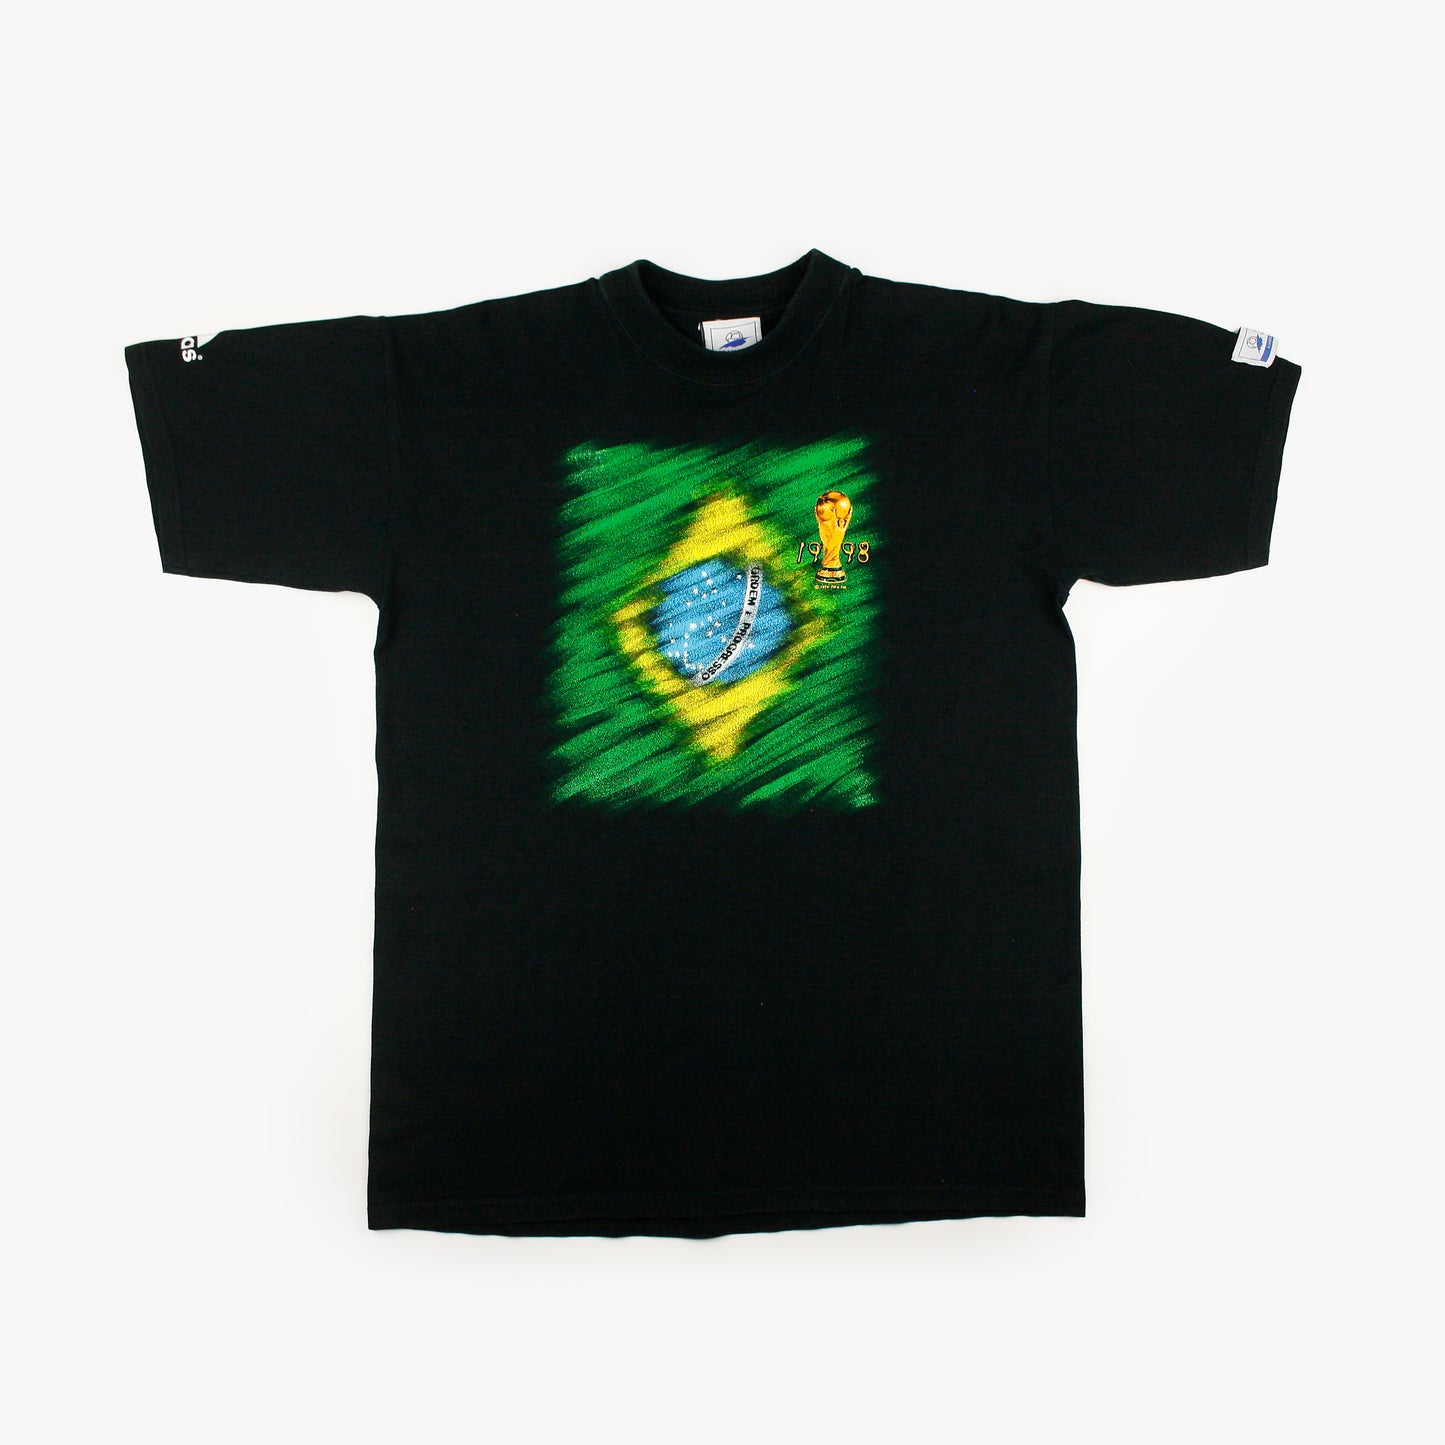 Brazil 98 • France '98 Official Merchandise • L